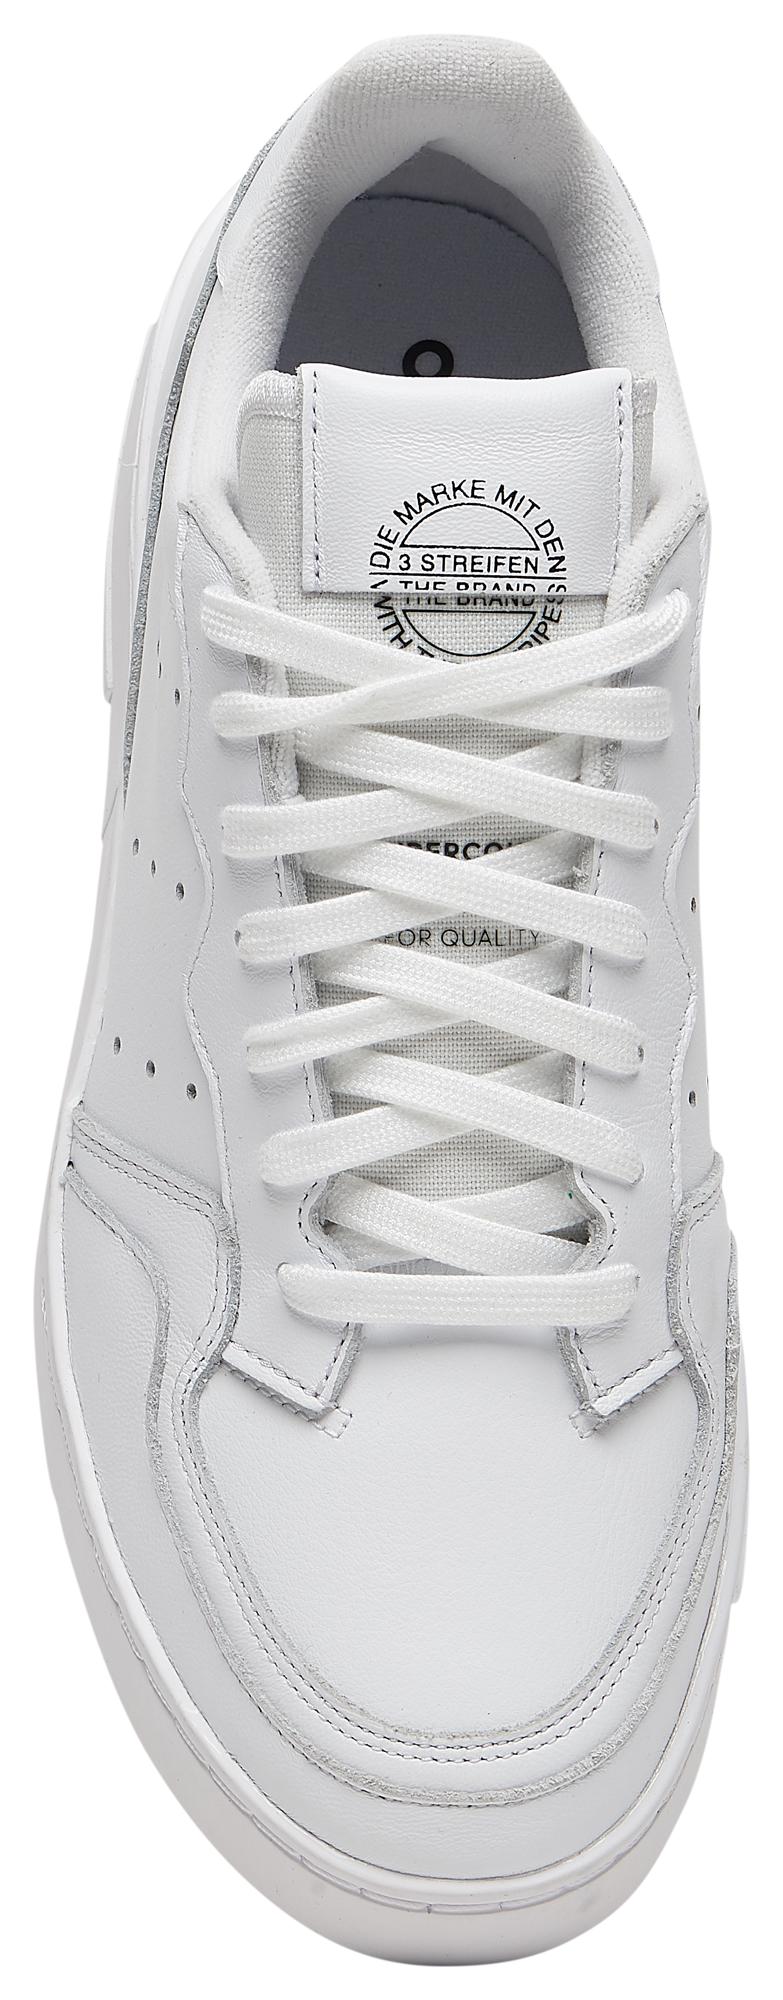 adidas Originals Rubber Supercourt in White/White/Black (White) for Men -  Lyst